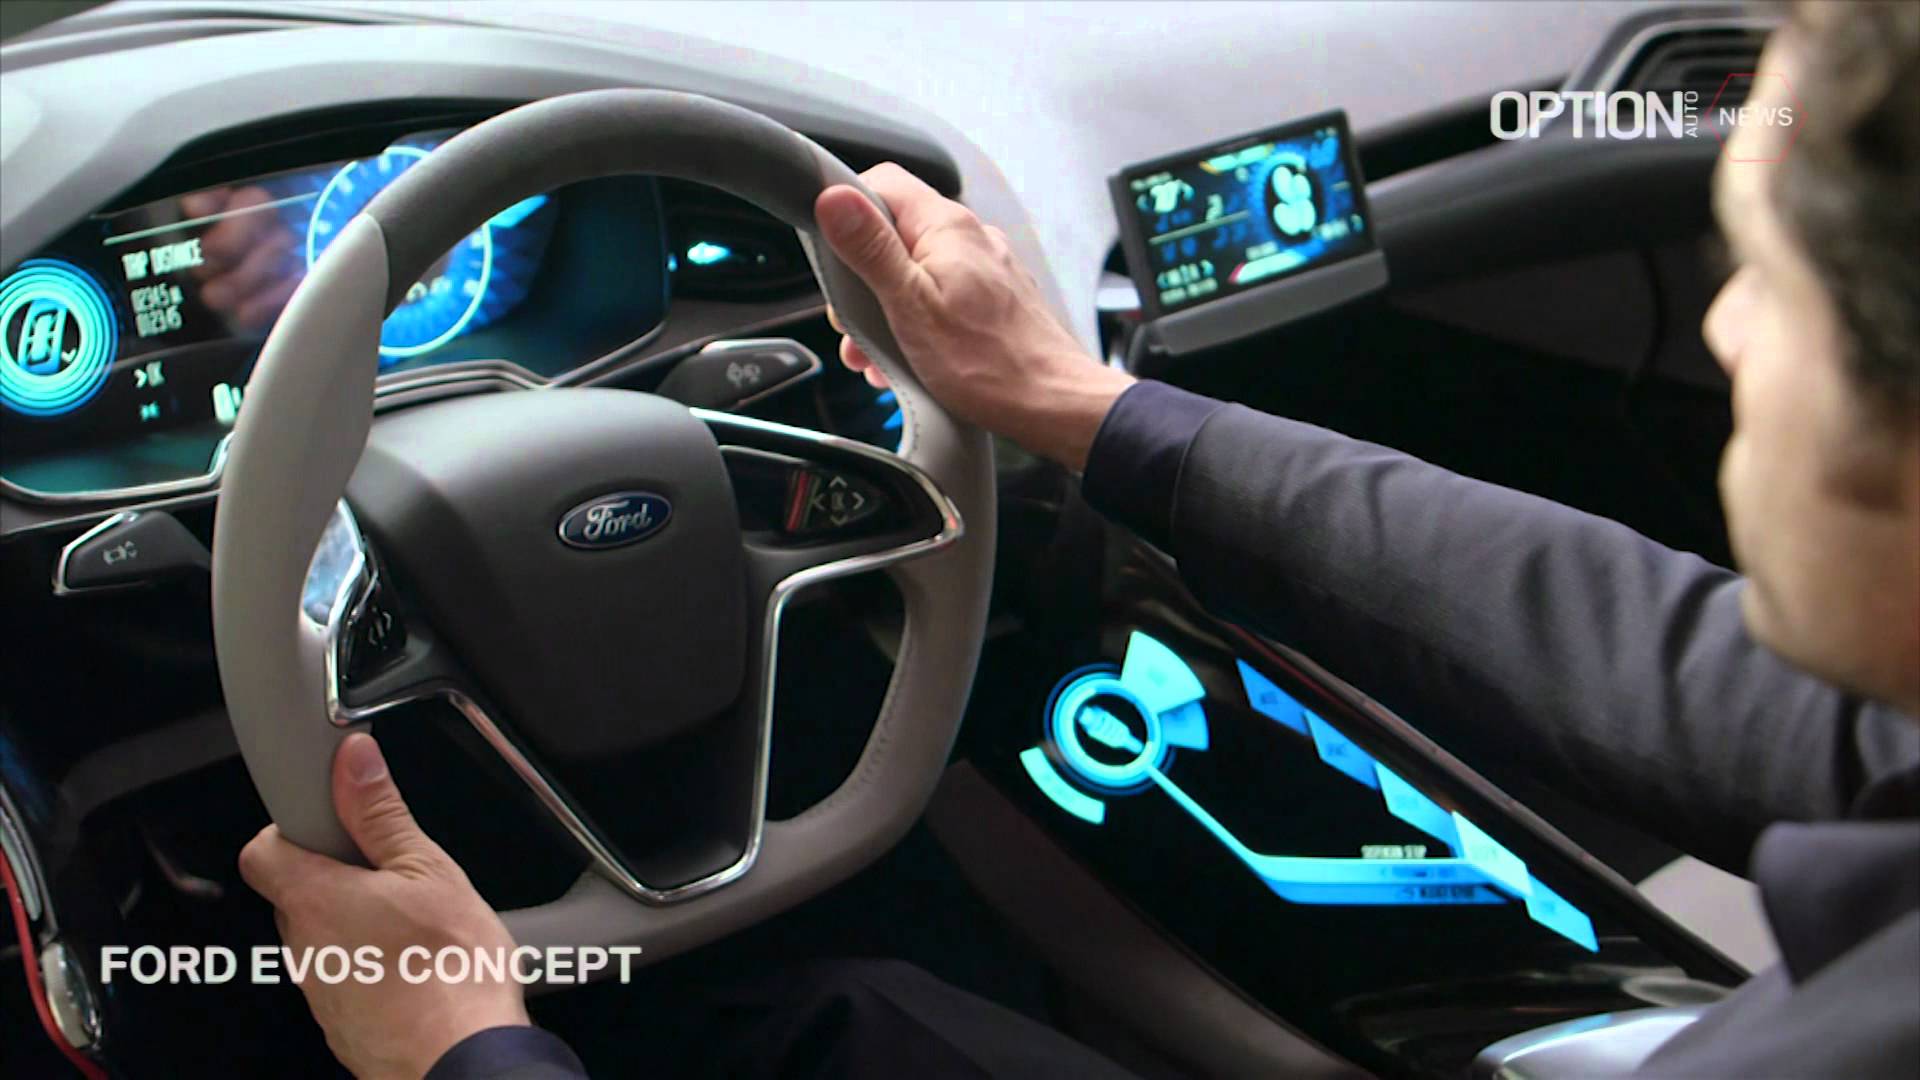 Ford Evos Concept [HD] (Option Auto News) - YouTube